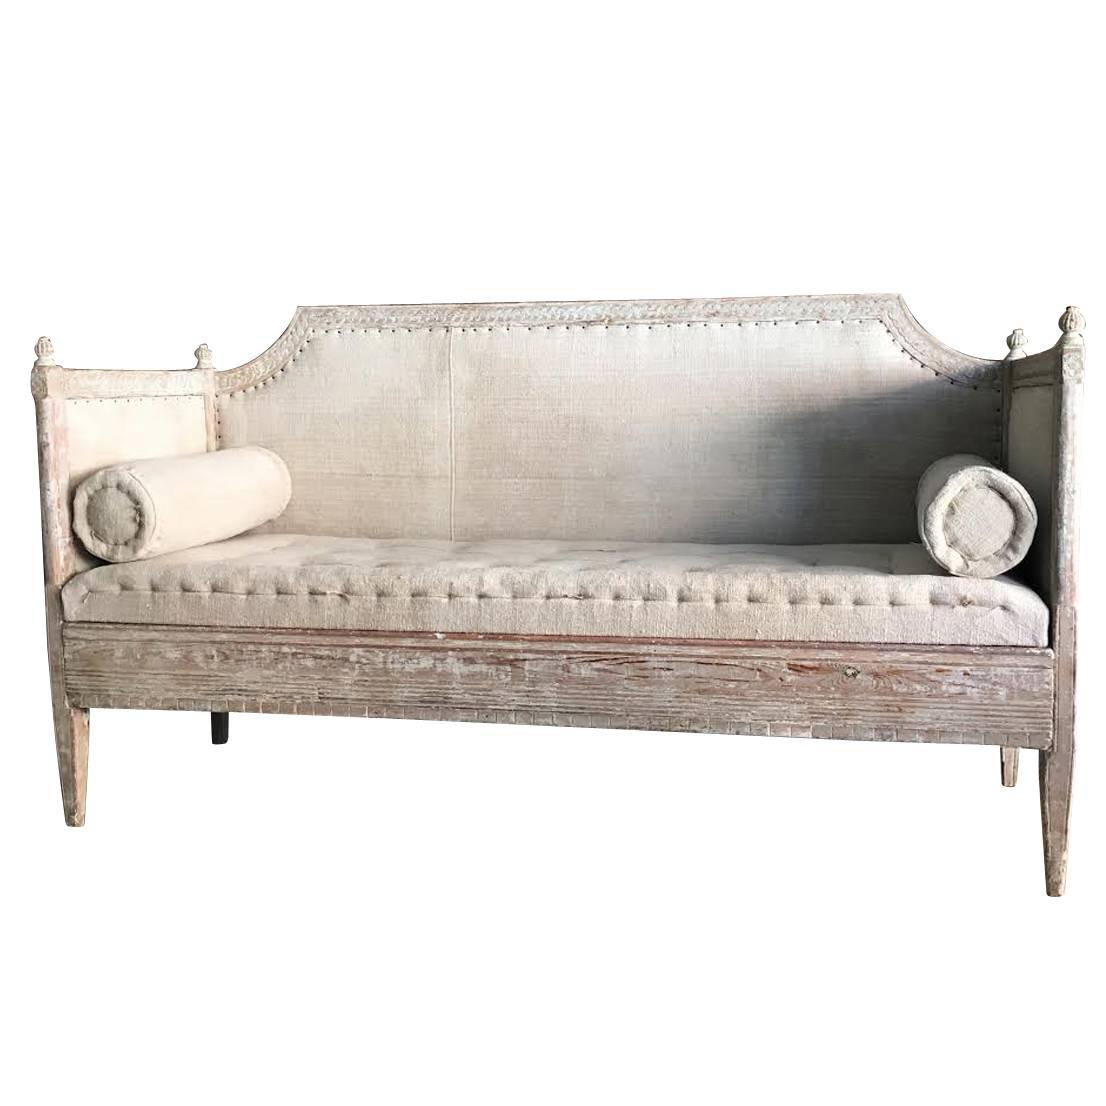 Swedish Early Gustavian Period Sofa in Original Paint, 18th Century Antique